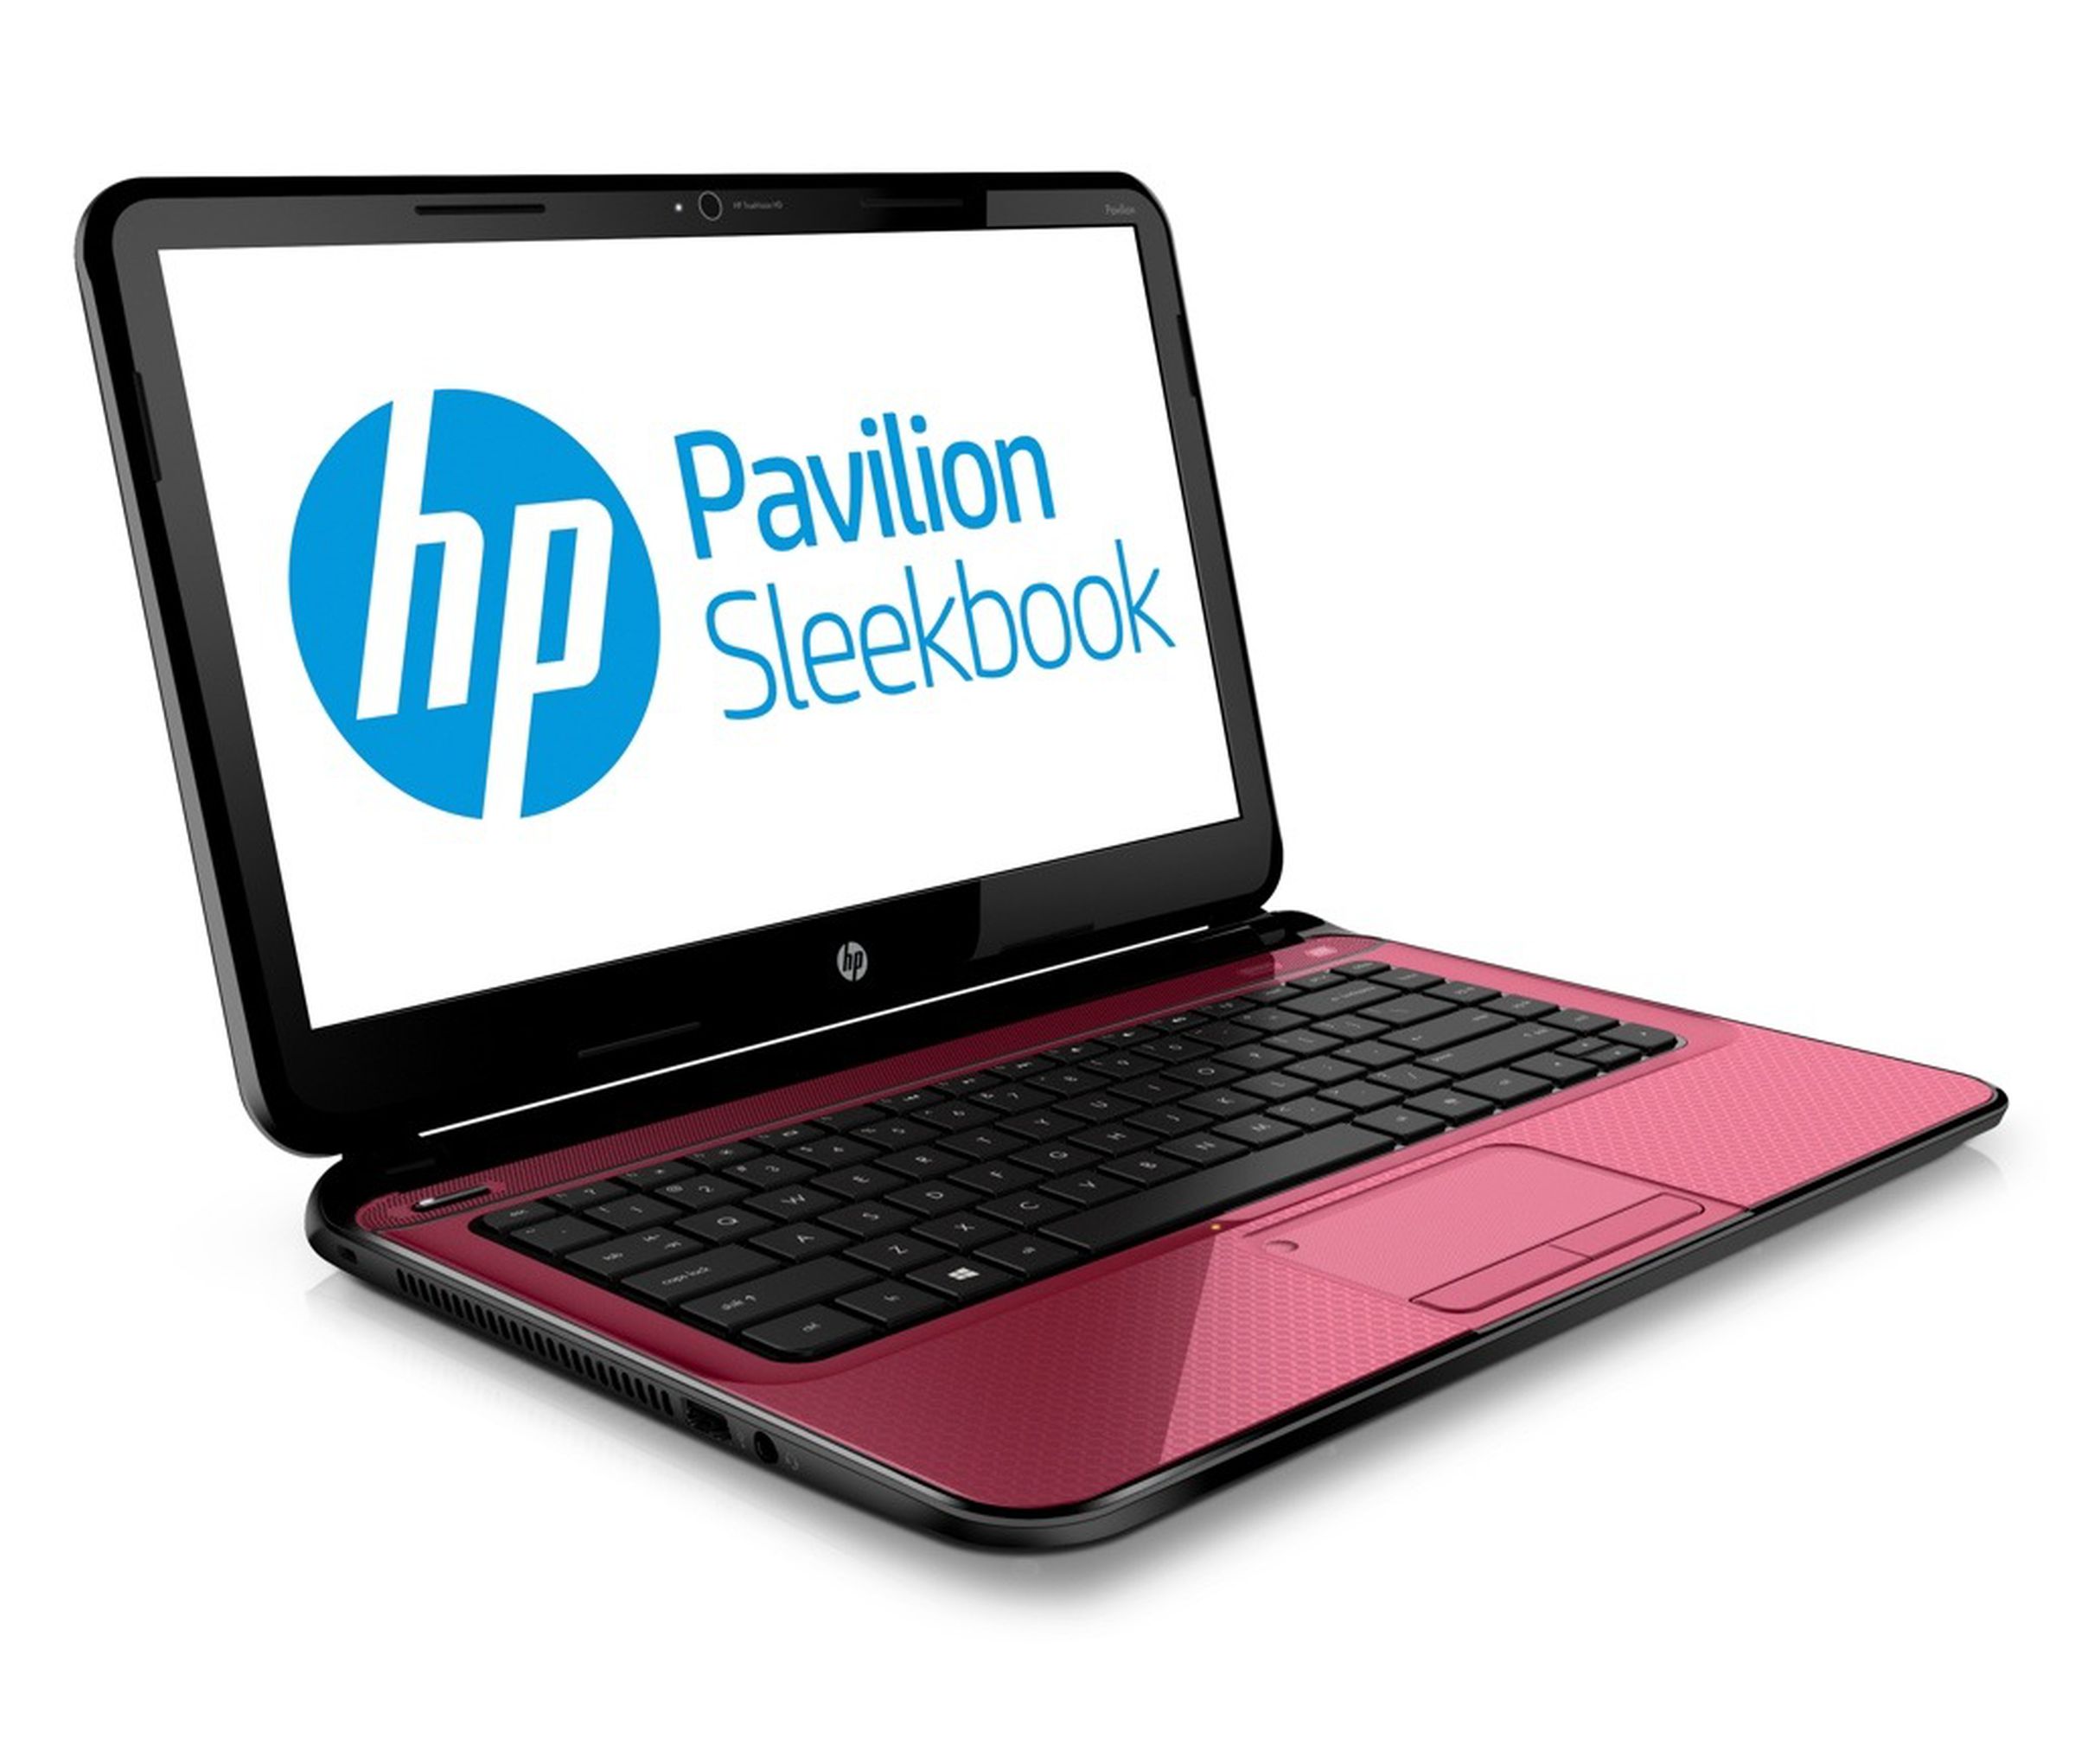 HP Pavilion Sleekbook 14 and Pavilion Sleekbook 15 official photos